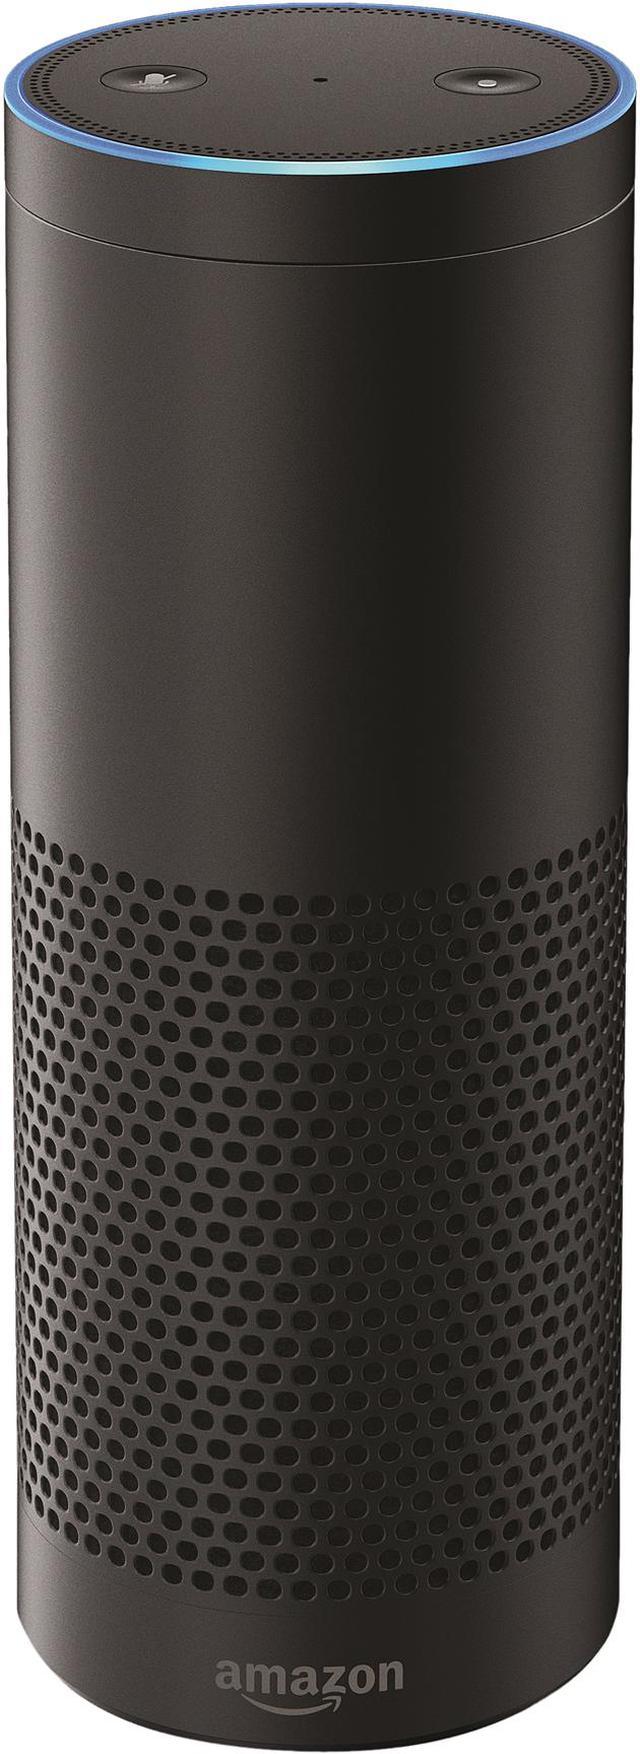 Echo Plus Alexa-enabled Bluetooth Speaker - Black